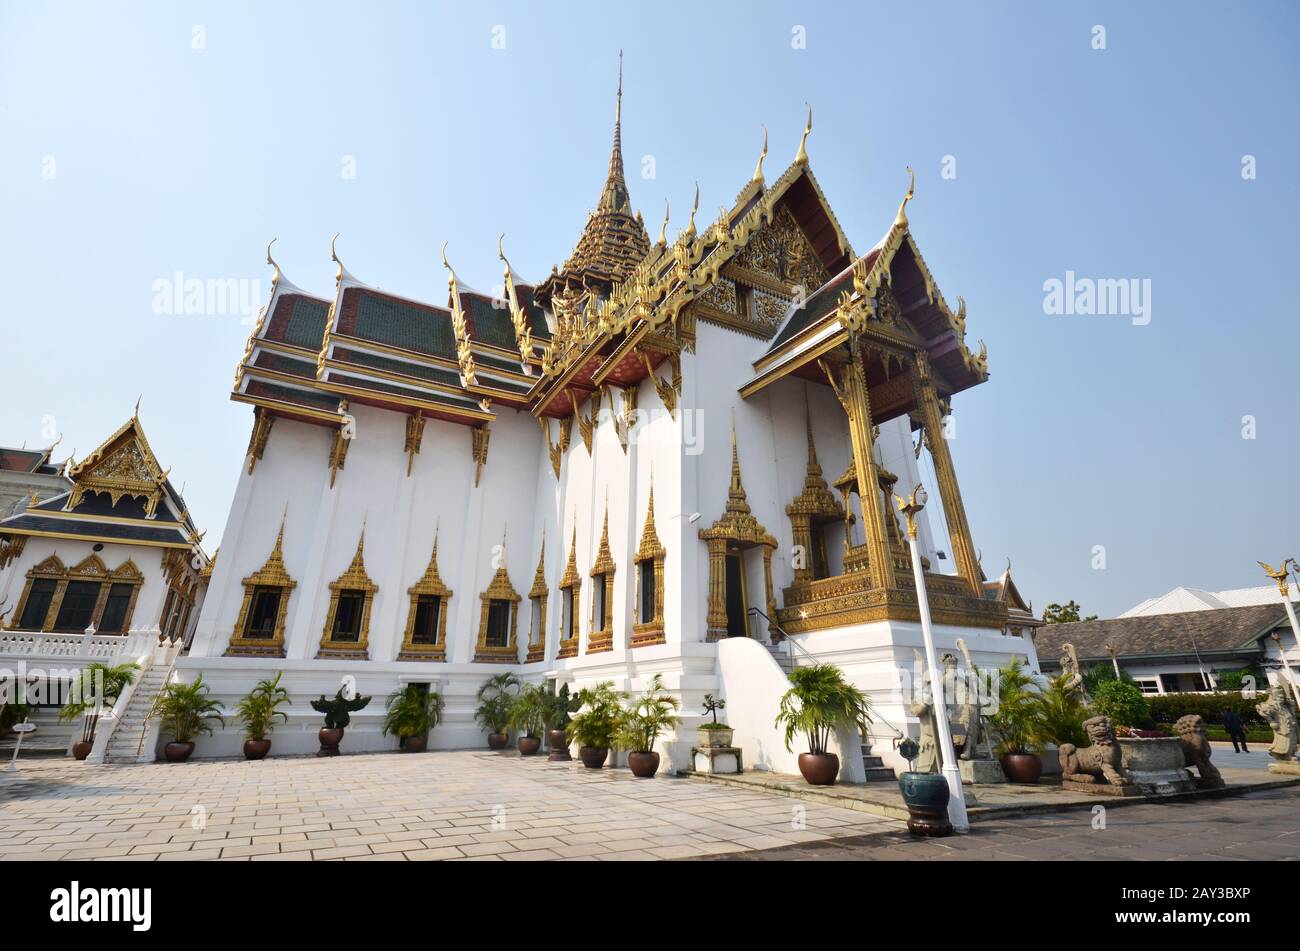 Il Tempio di marmo - Wat Benchamabophit, Bangkok, Thailandia Foto Stock